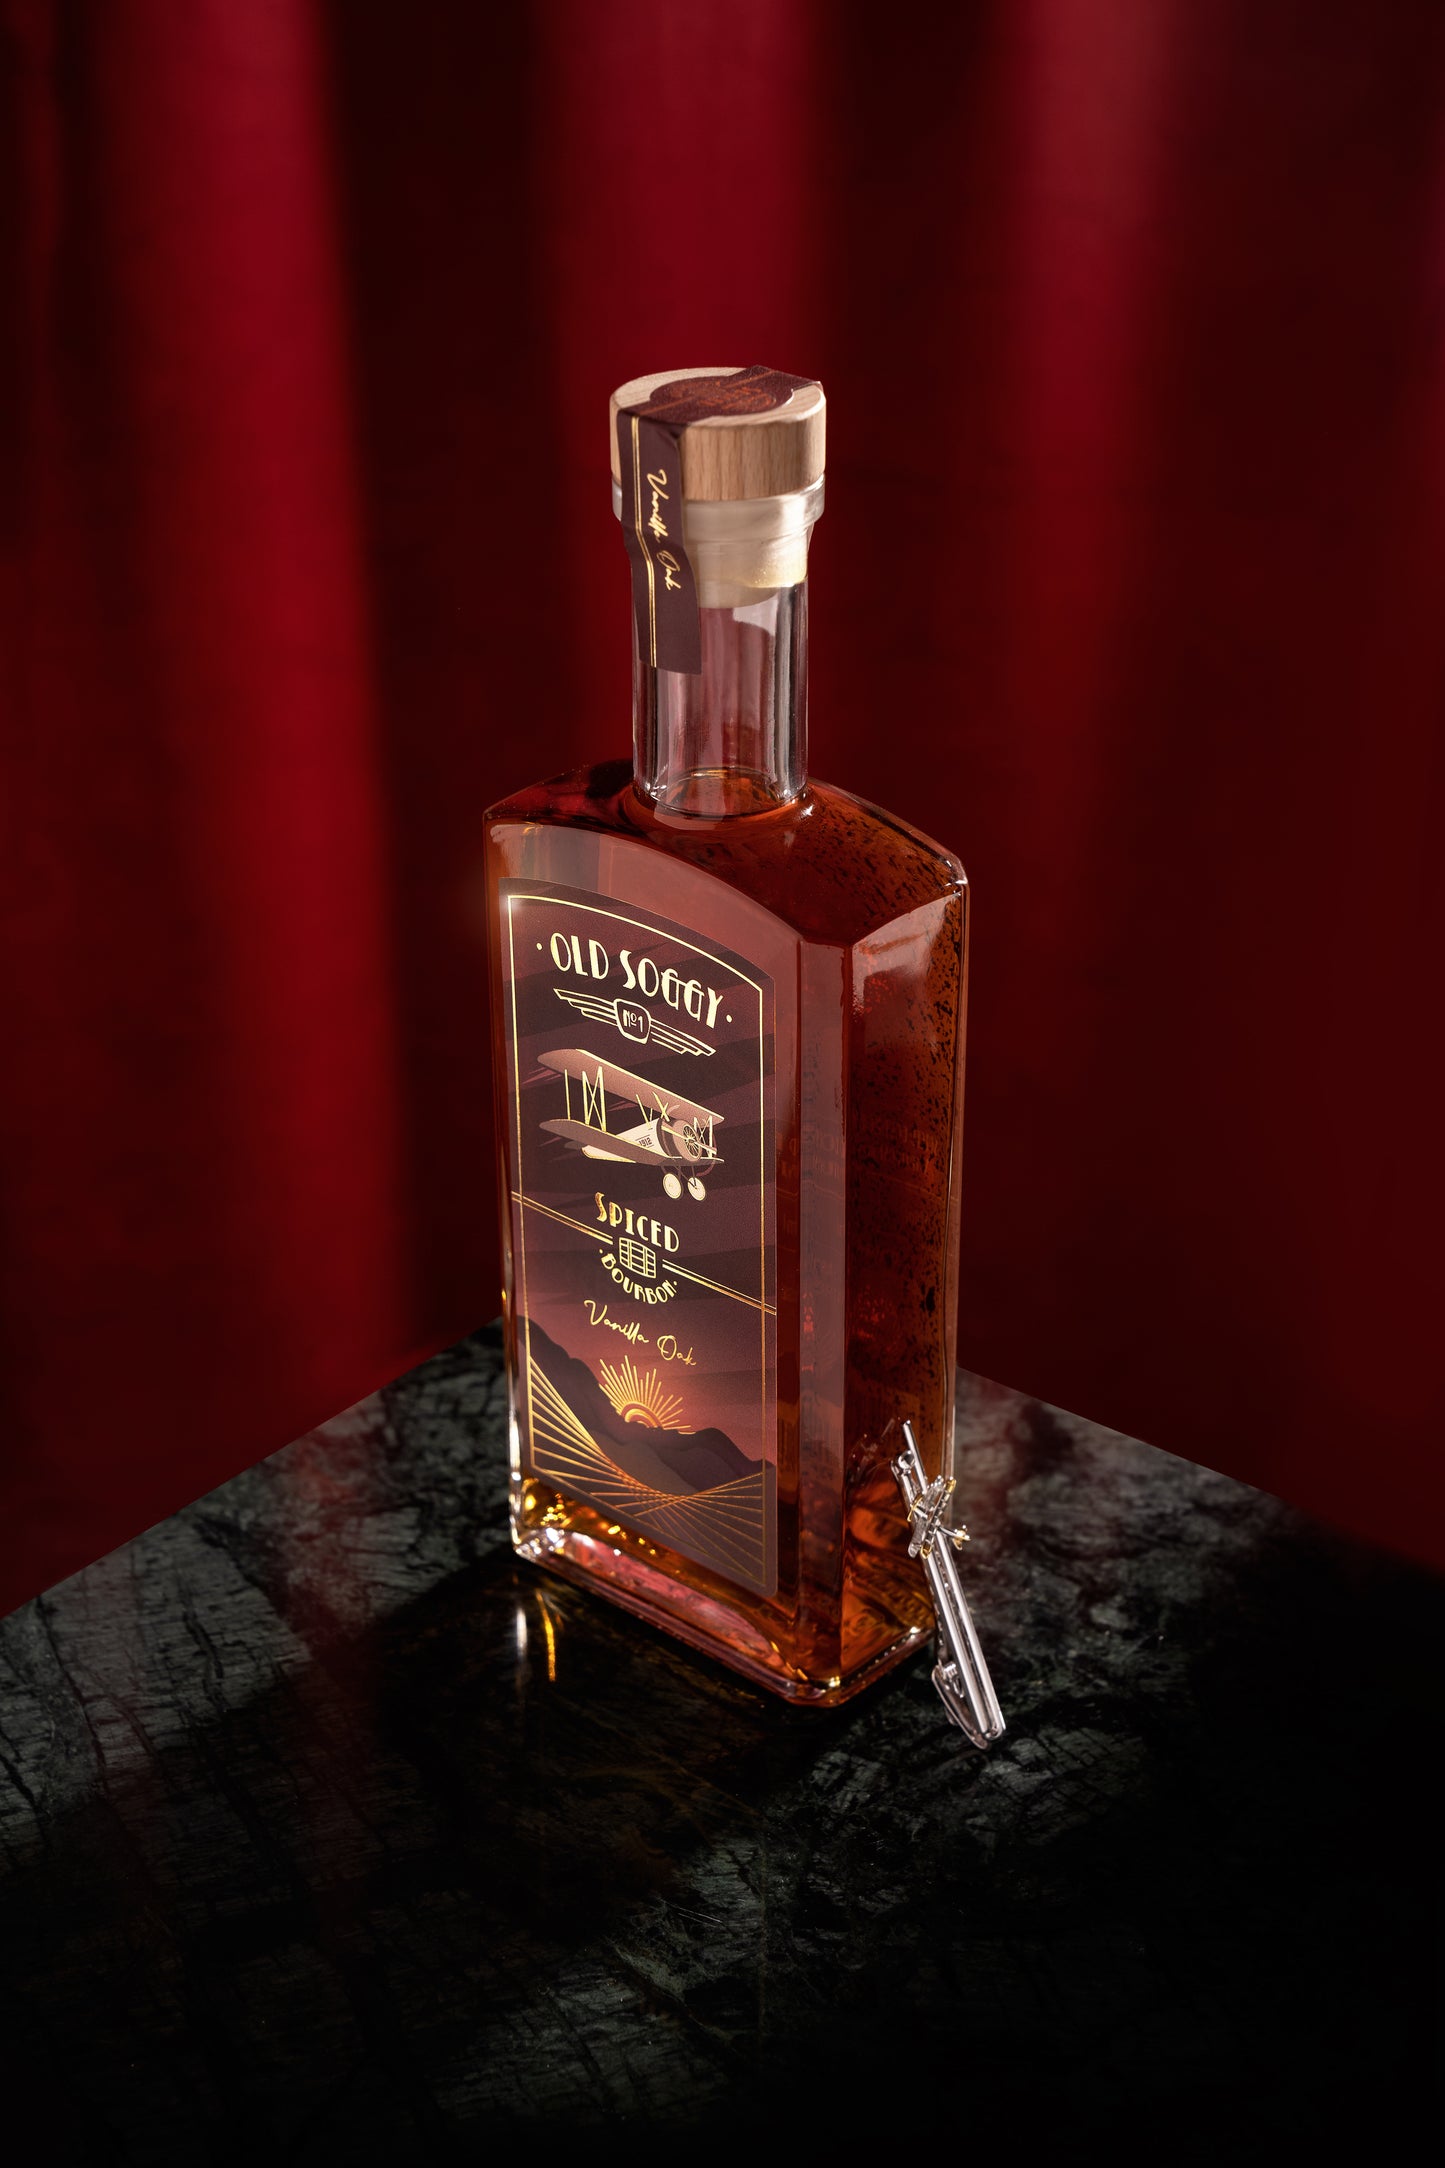 Old Soggy Spiced Bourbon